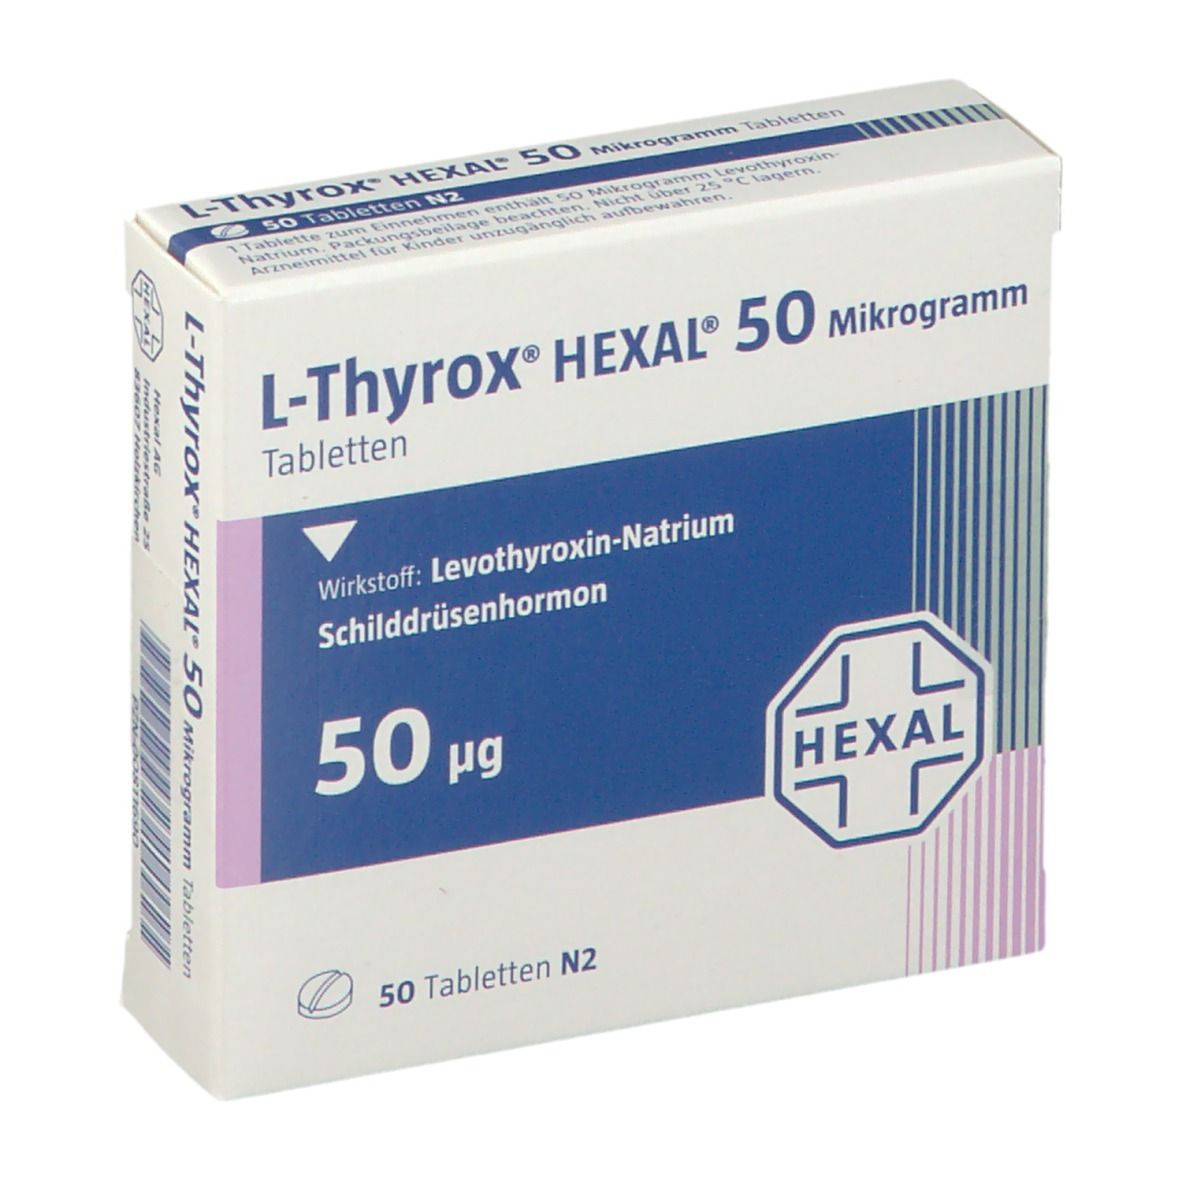 Anderen wechselwirkung medikamenten thyroxin mit l Wechselwirkungen: 7